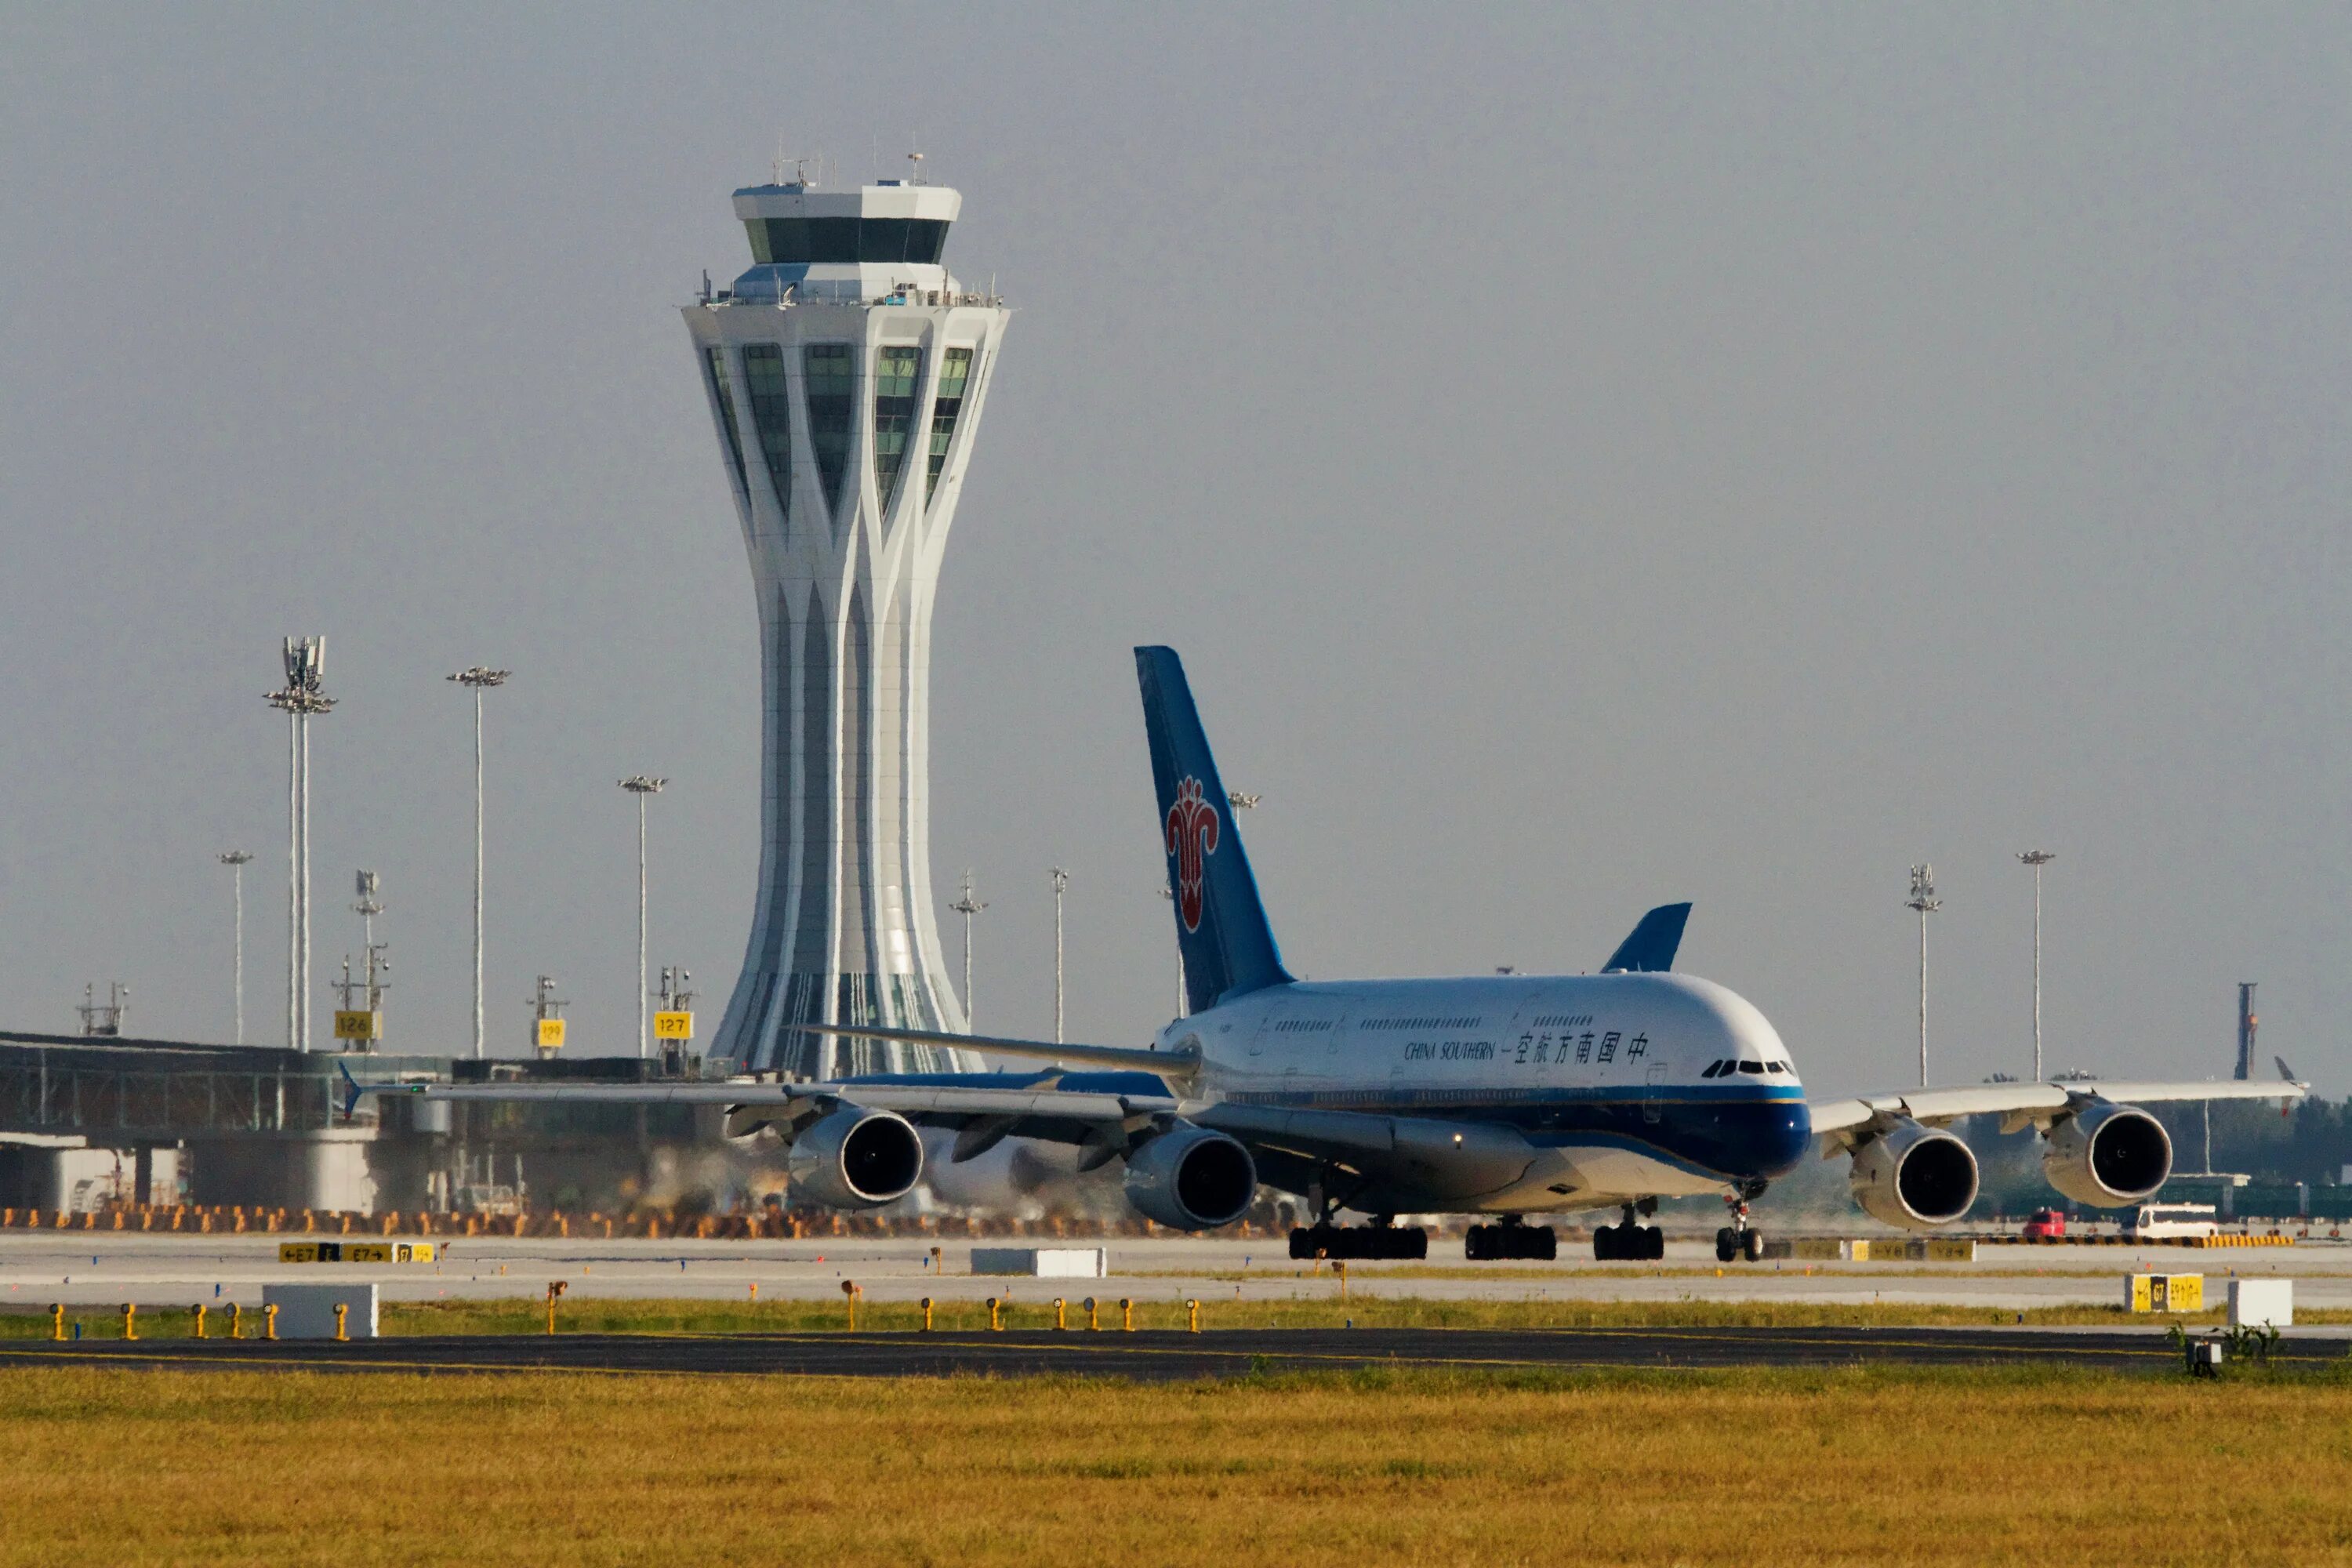 Какой самой большой аэропорт в мире. Аэропорт Пекин Дасин. Пекин Дасин, Международный аэропорт, Китай. Международный аэропорт Шоуду. Международный аэропорт Шоуду, Китай.